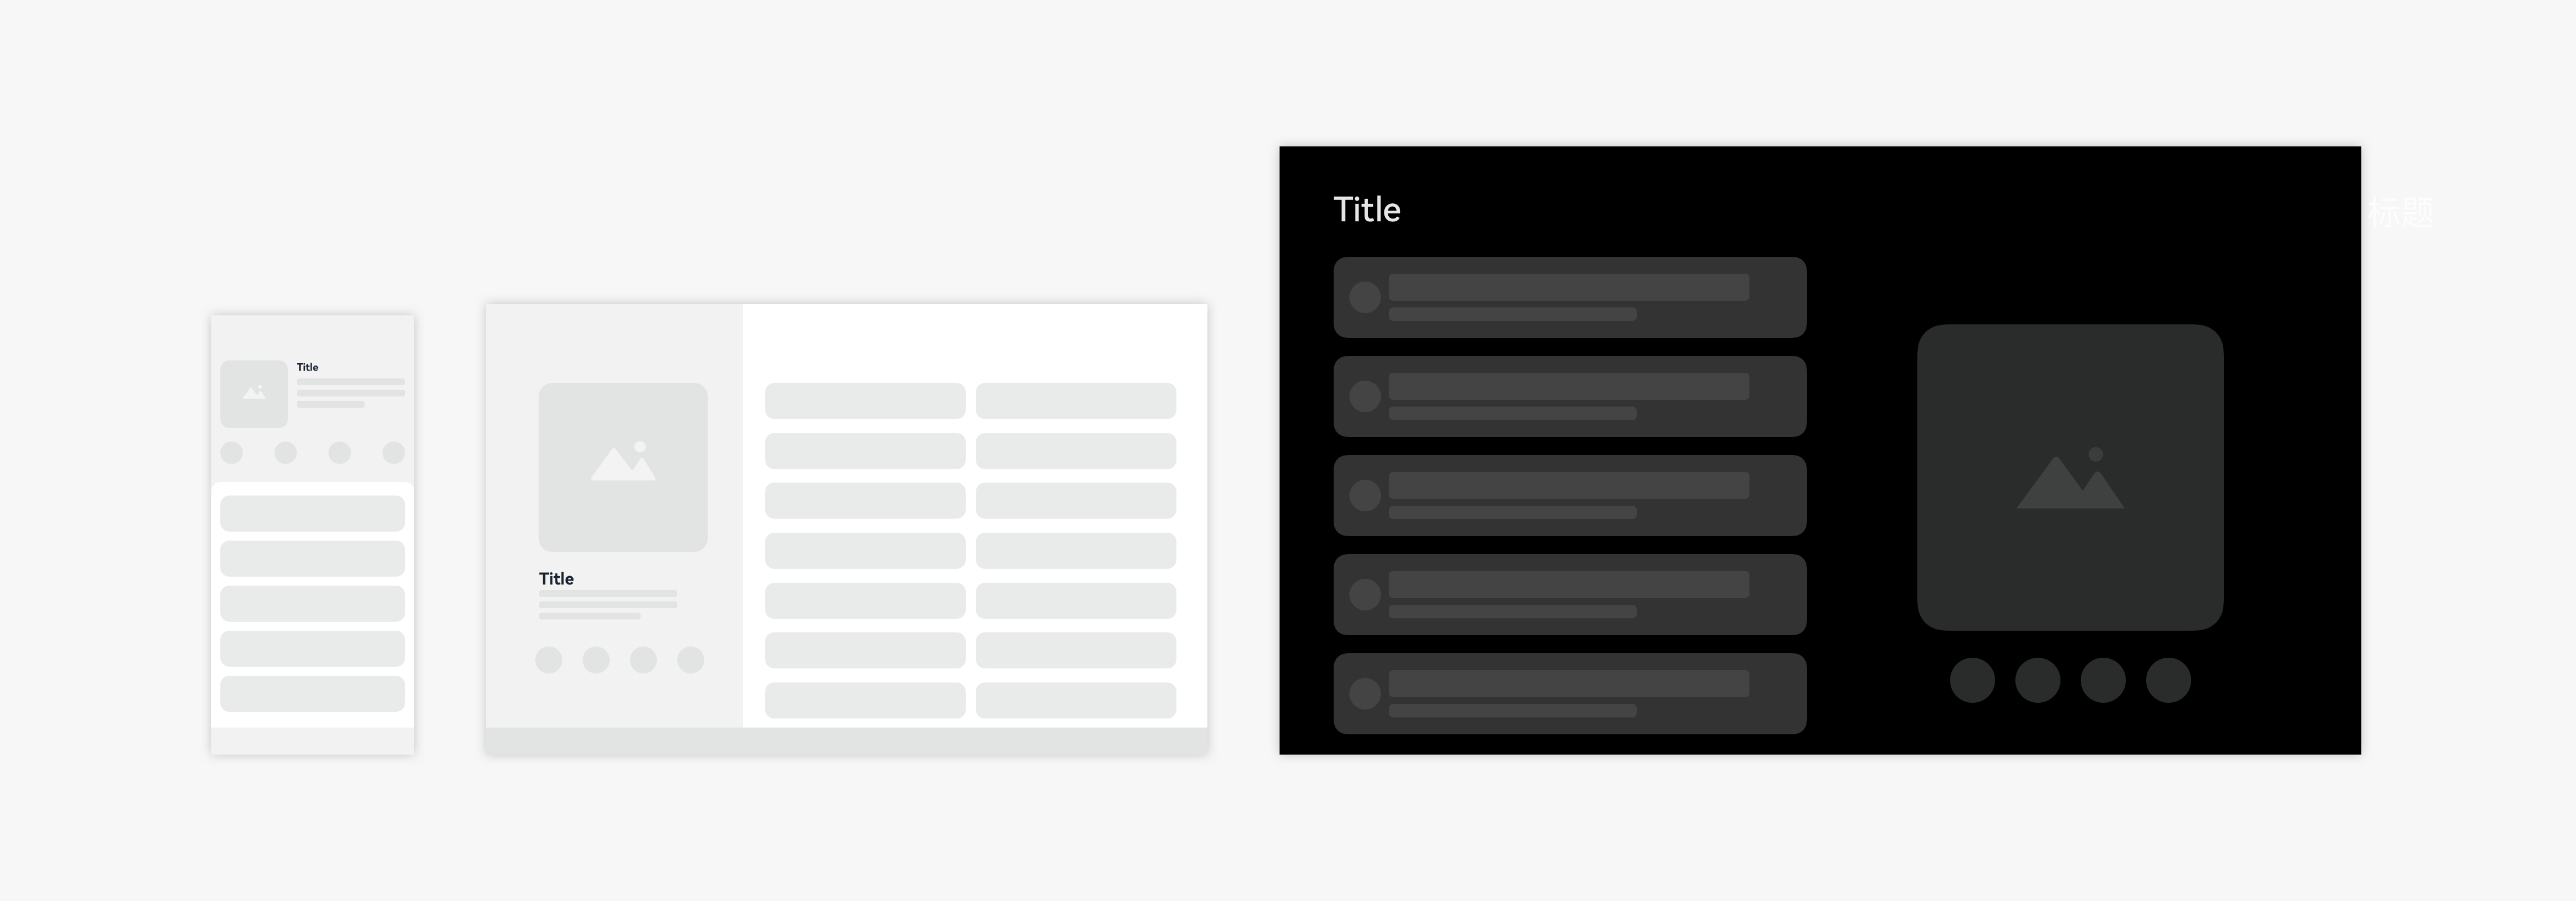 application-architecture-vertical-page-structure-album-details-page